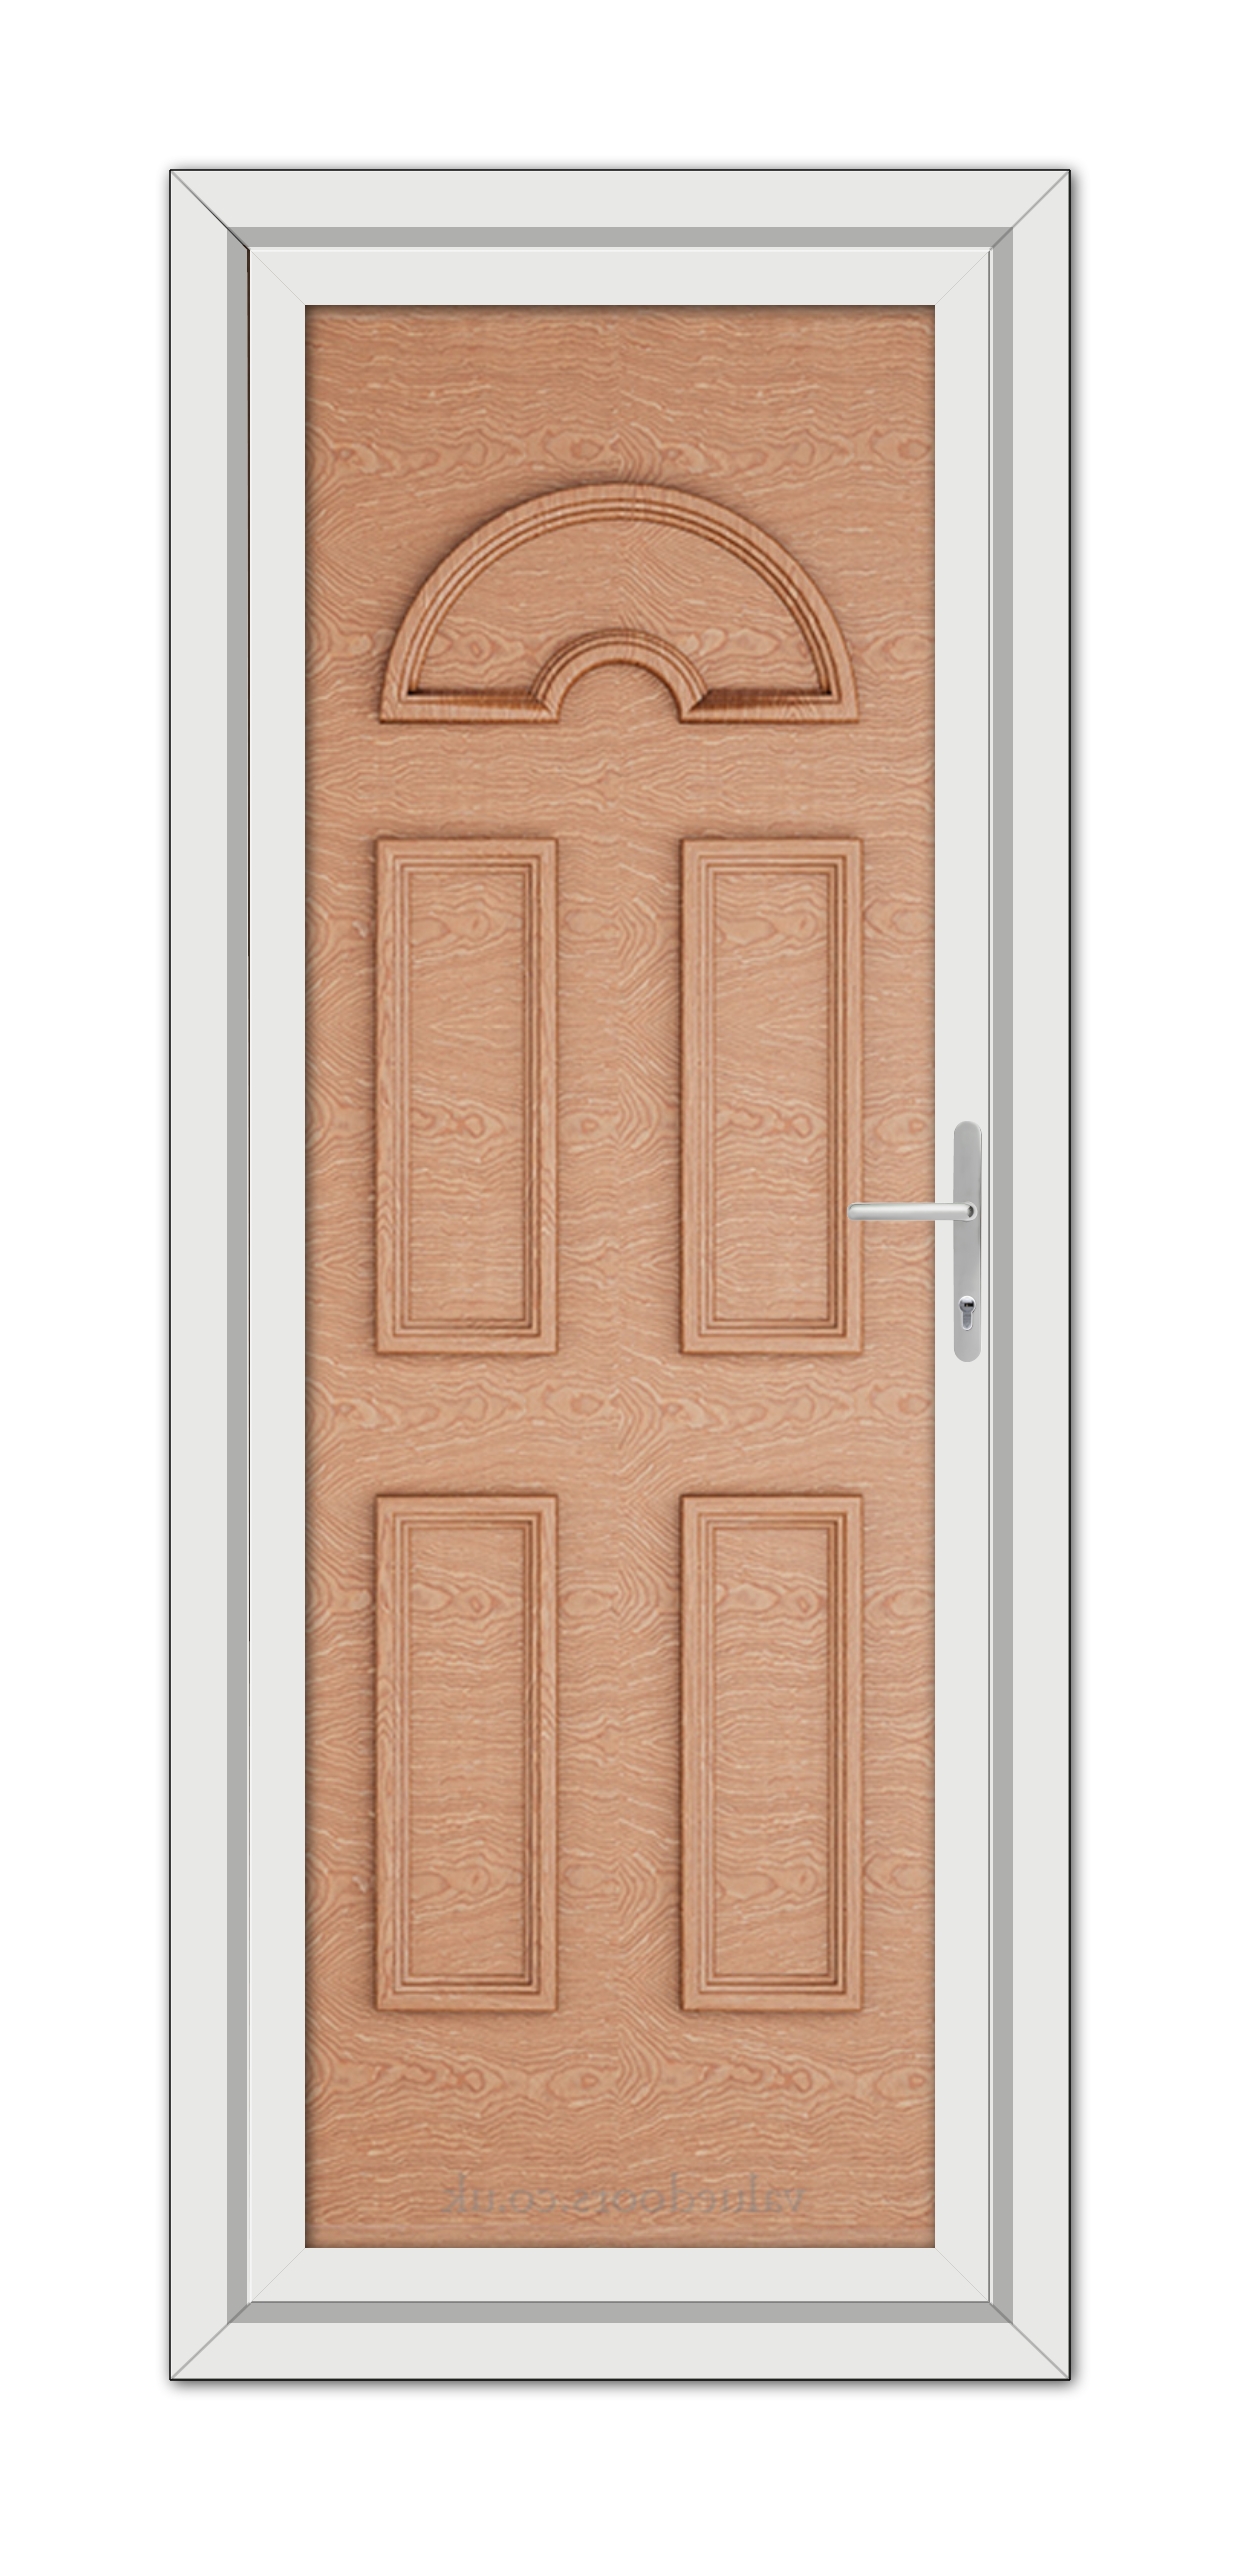 A close-up of an Irish Oak Sandringham Solid uPVC Door.